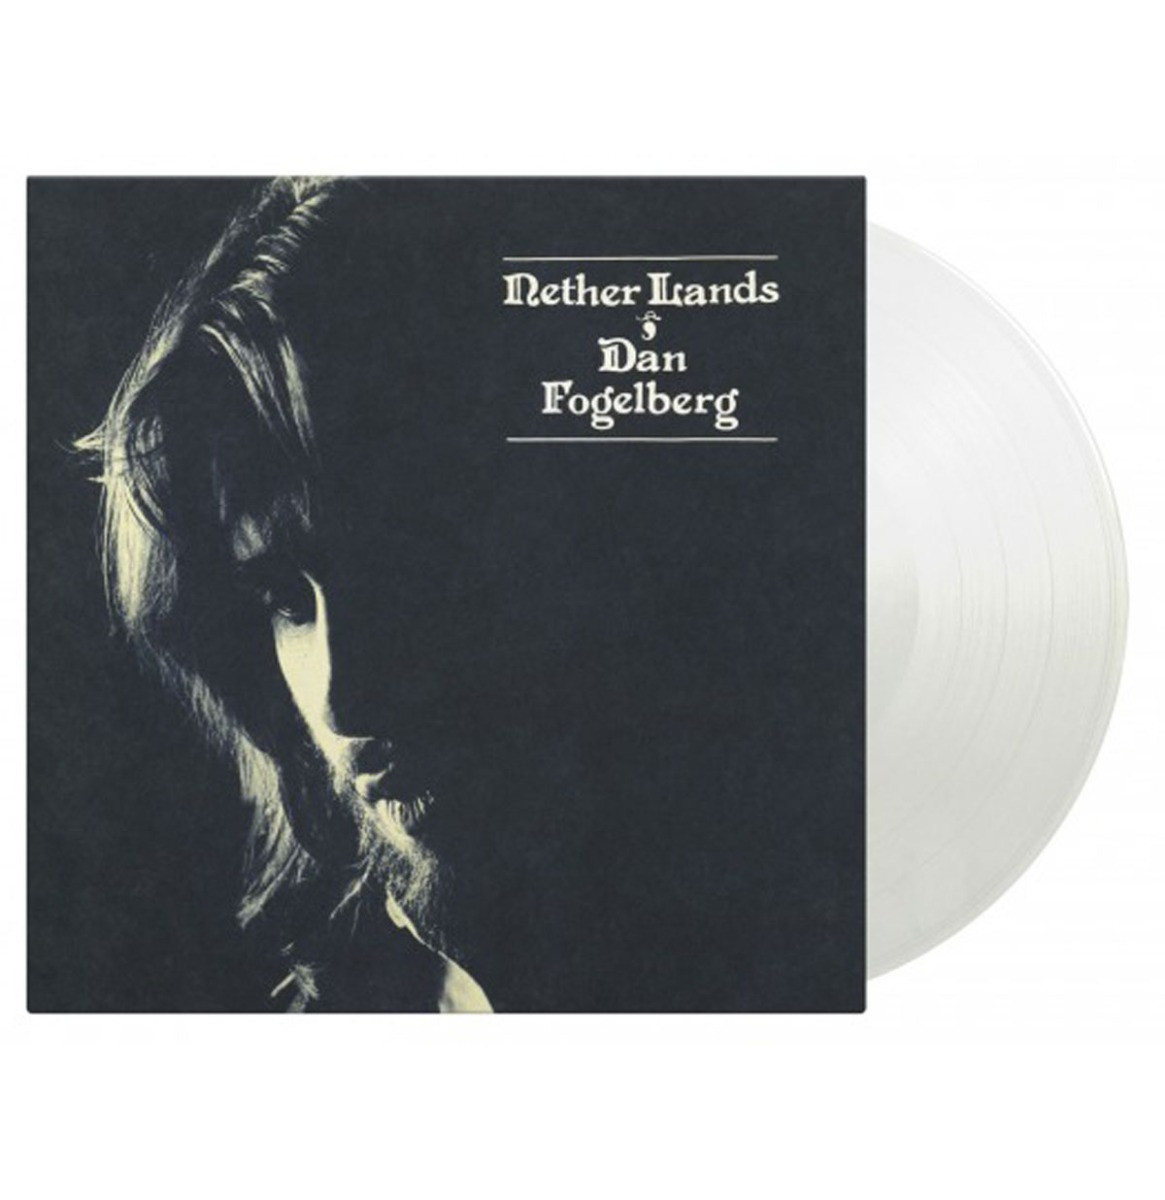 Dan Fogelberg - Nether Lands (Gekleurd Vinyl) LP